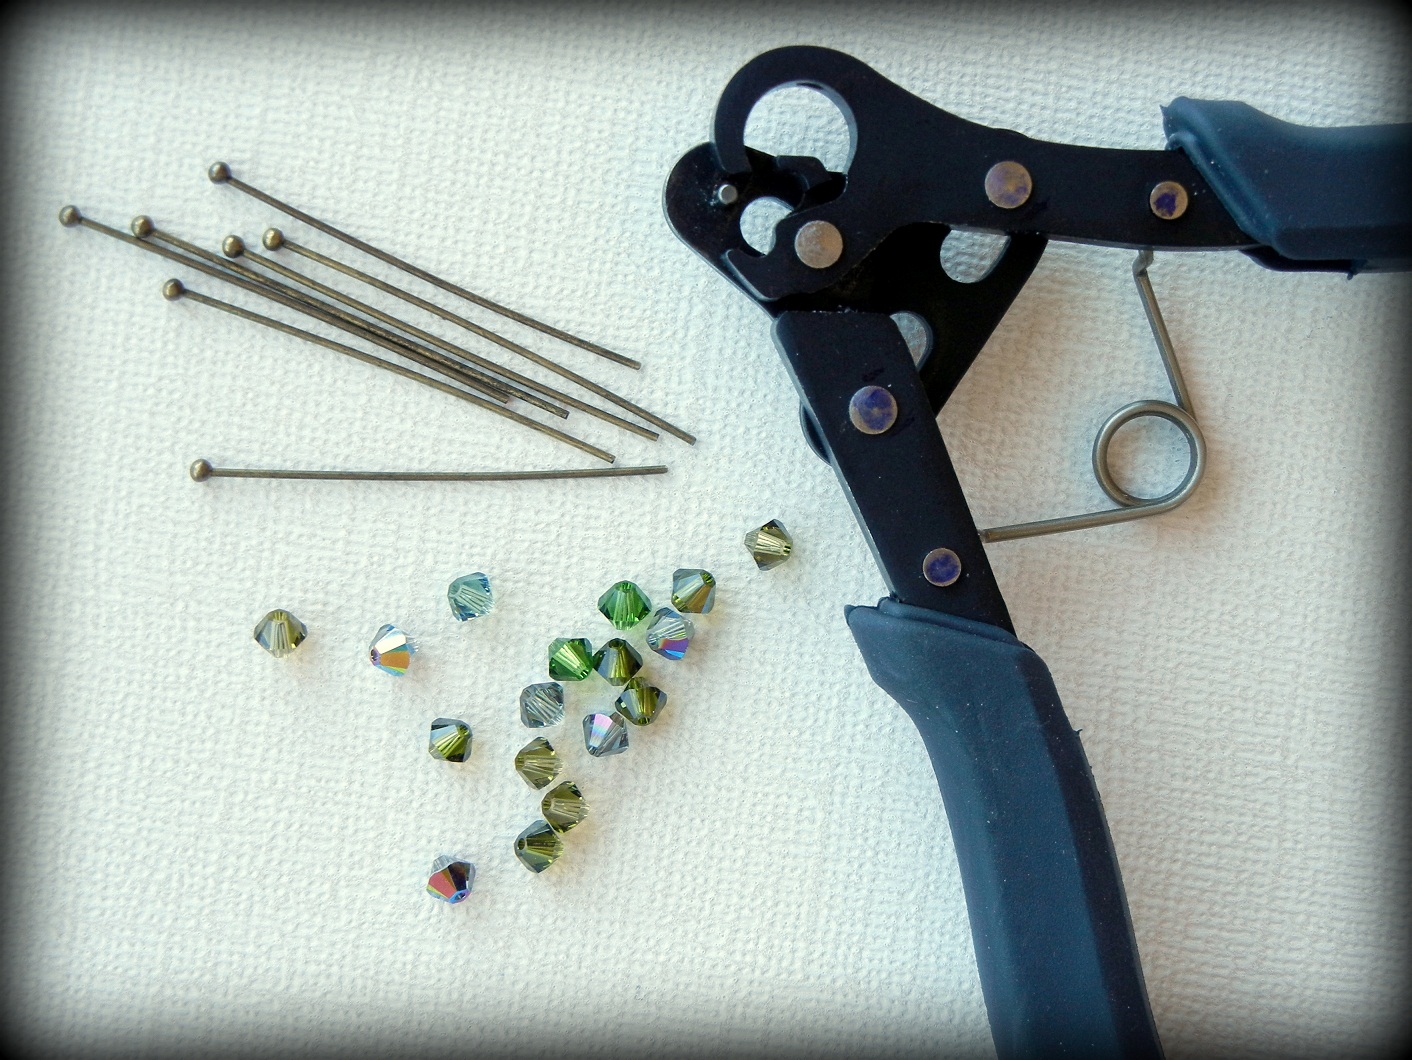 One Step Looper jewelry Tool Looper Craft Wire bending string